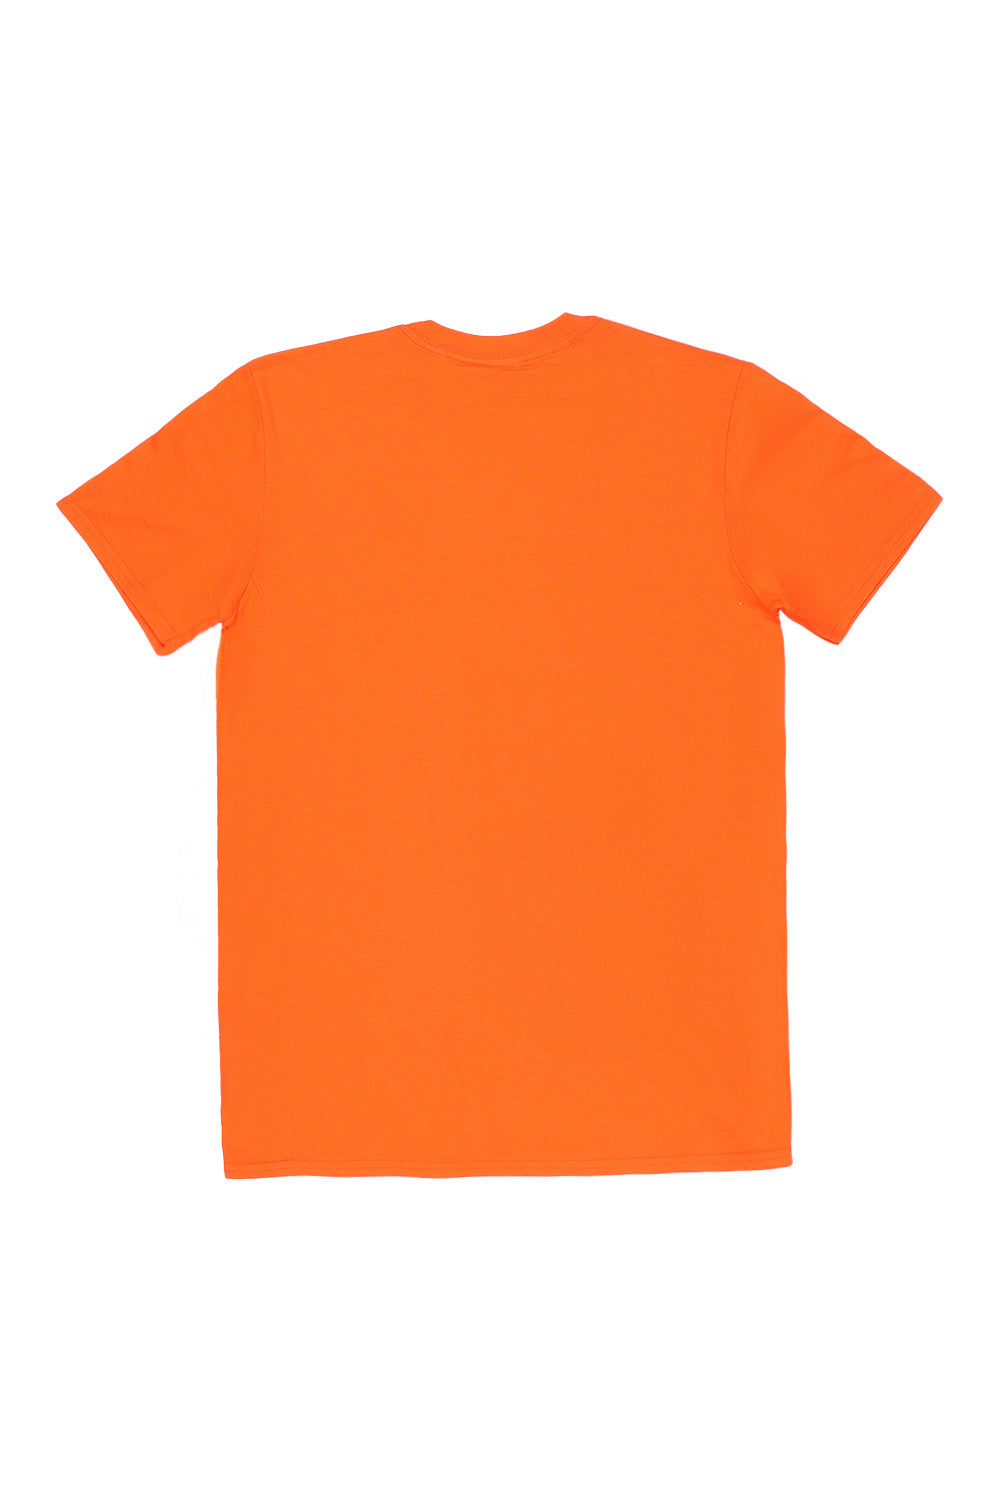 San Diego T-Shirt in Orange (Custom Packs)